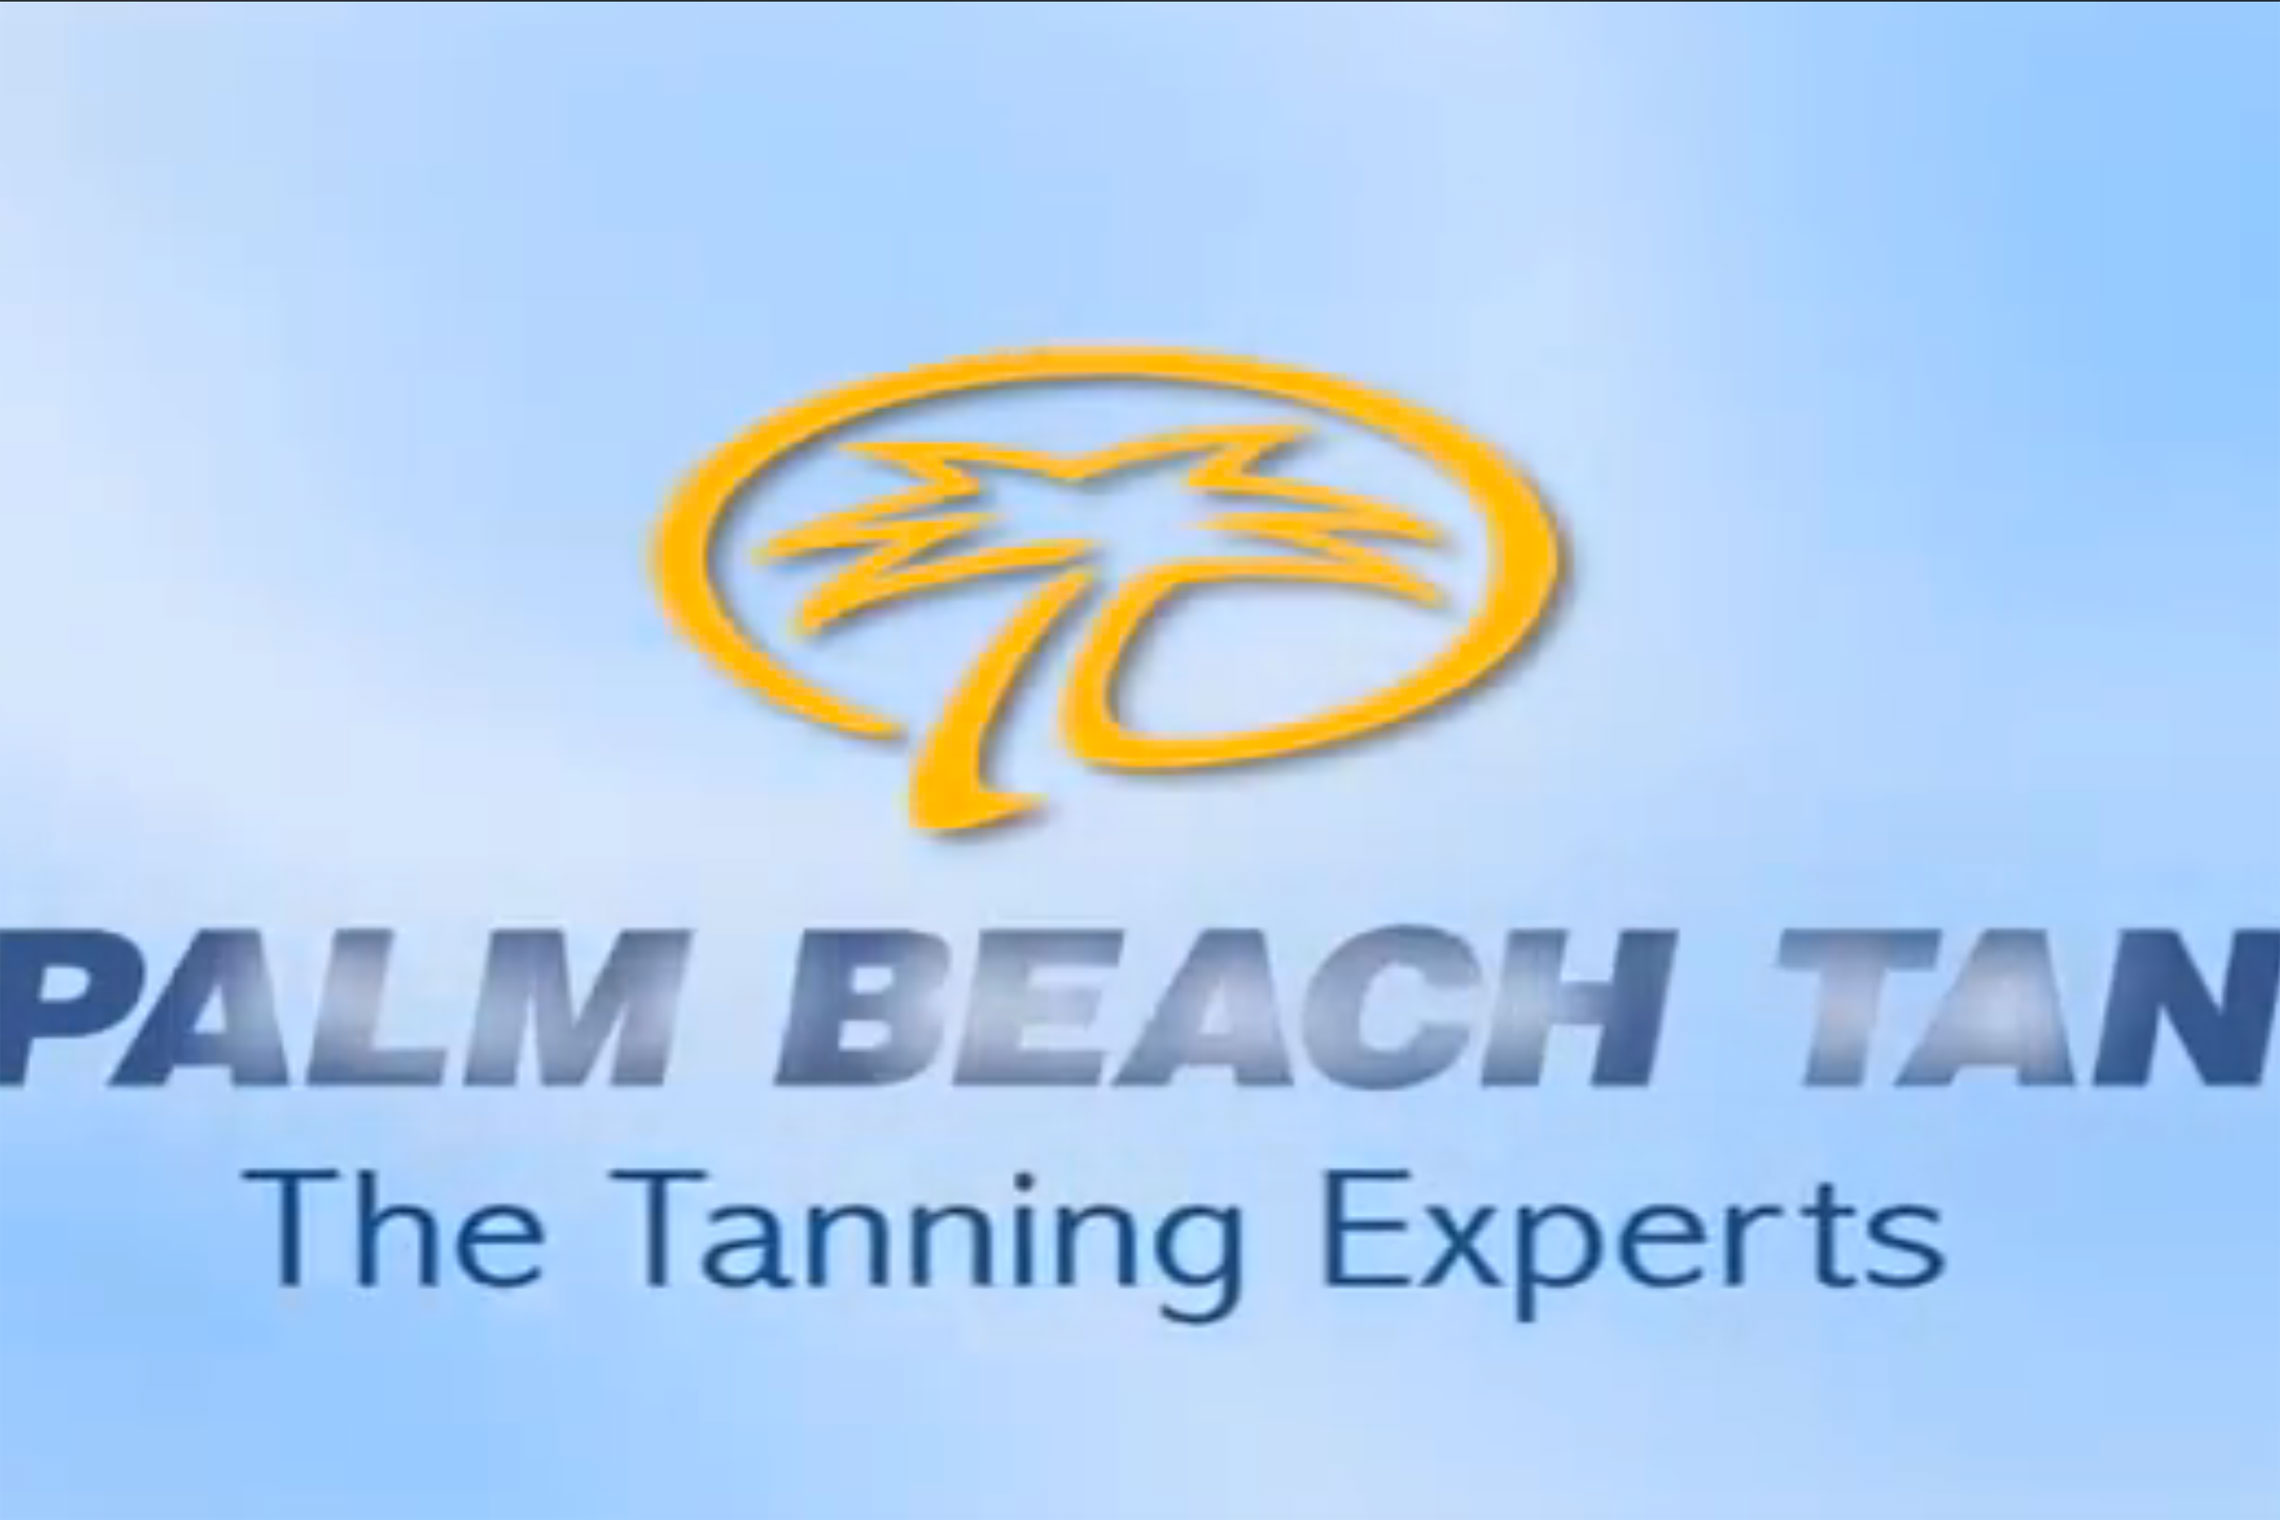 Palm Beach Tan Campaign - Advertising Videos